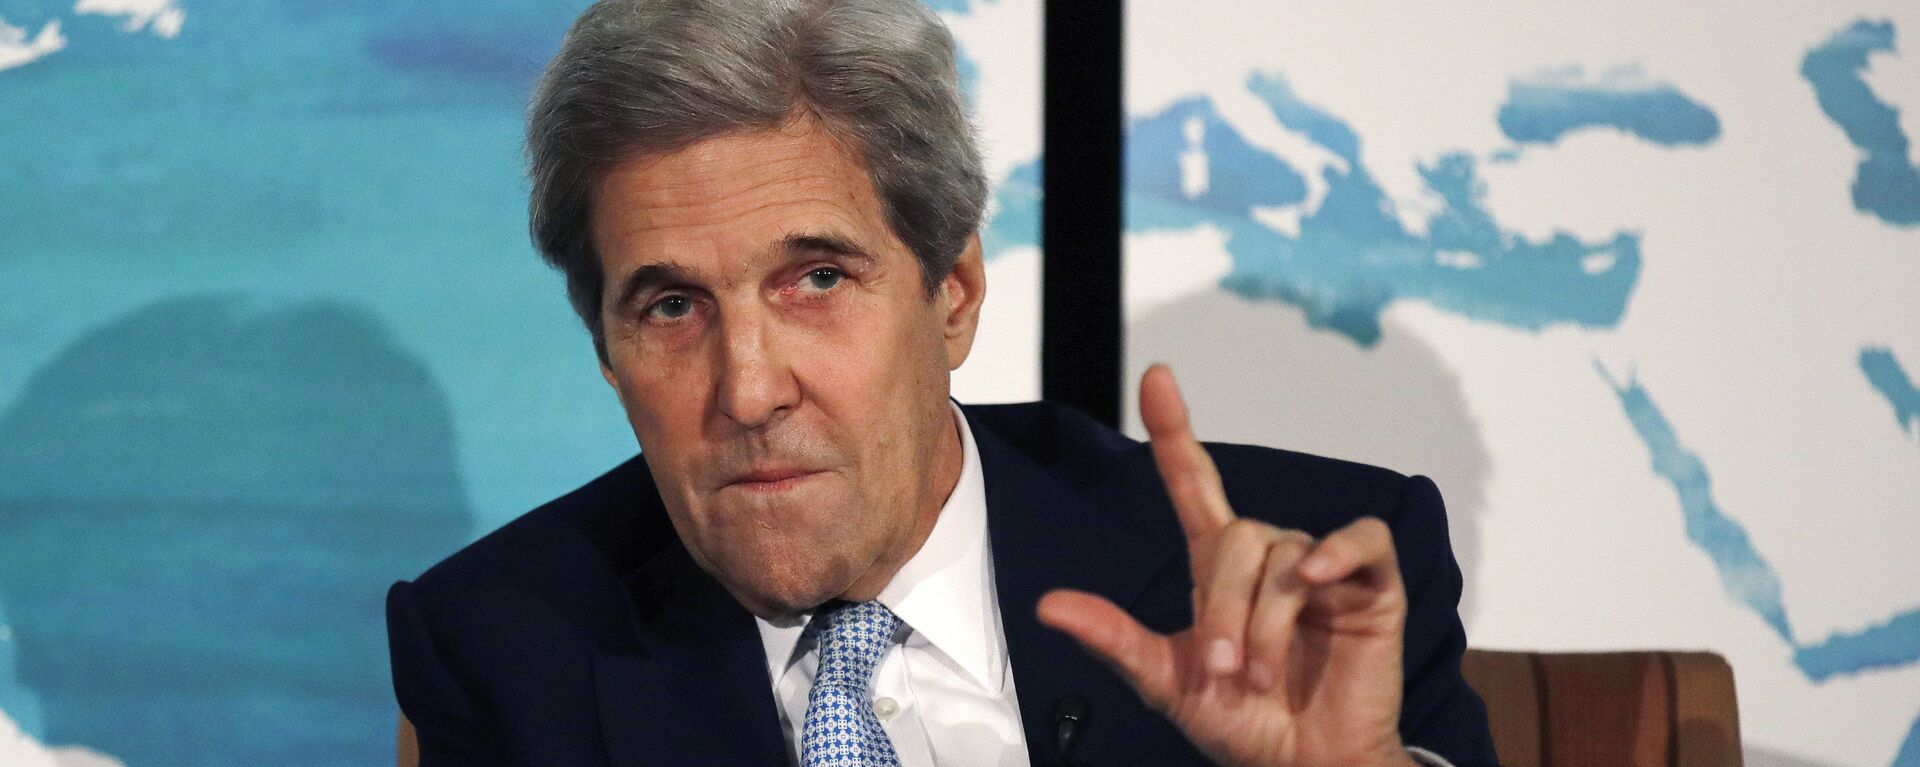 Former Secretary of State John Kerry gestures during the Boston Climate Summit in Boston, Thursday, June 7, 2018 - Sputnik International, 1920, 13.07.2023